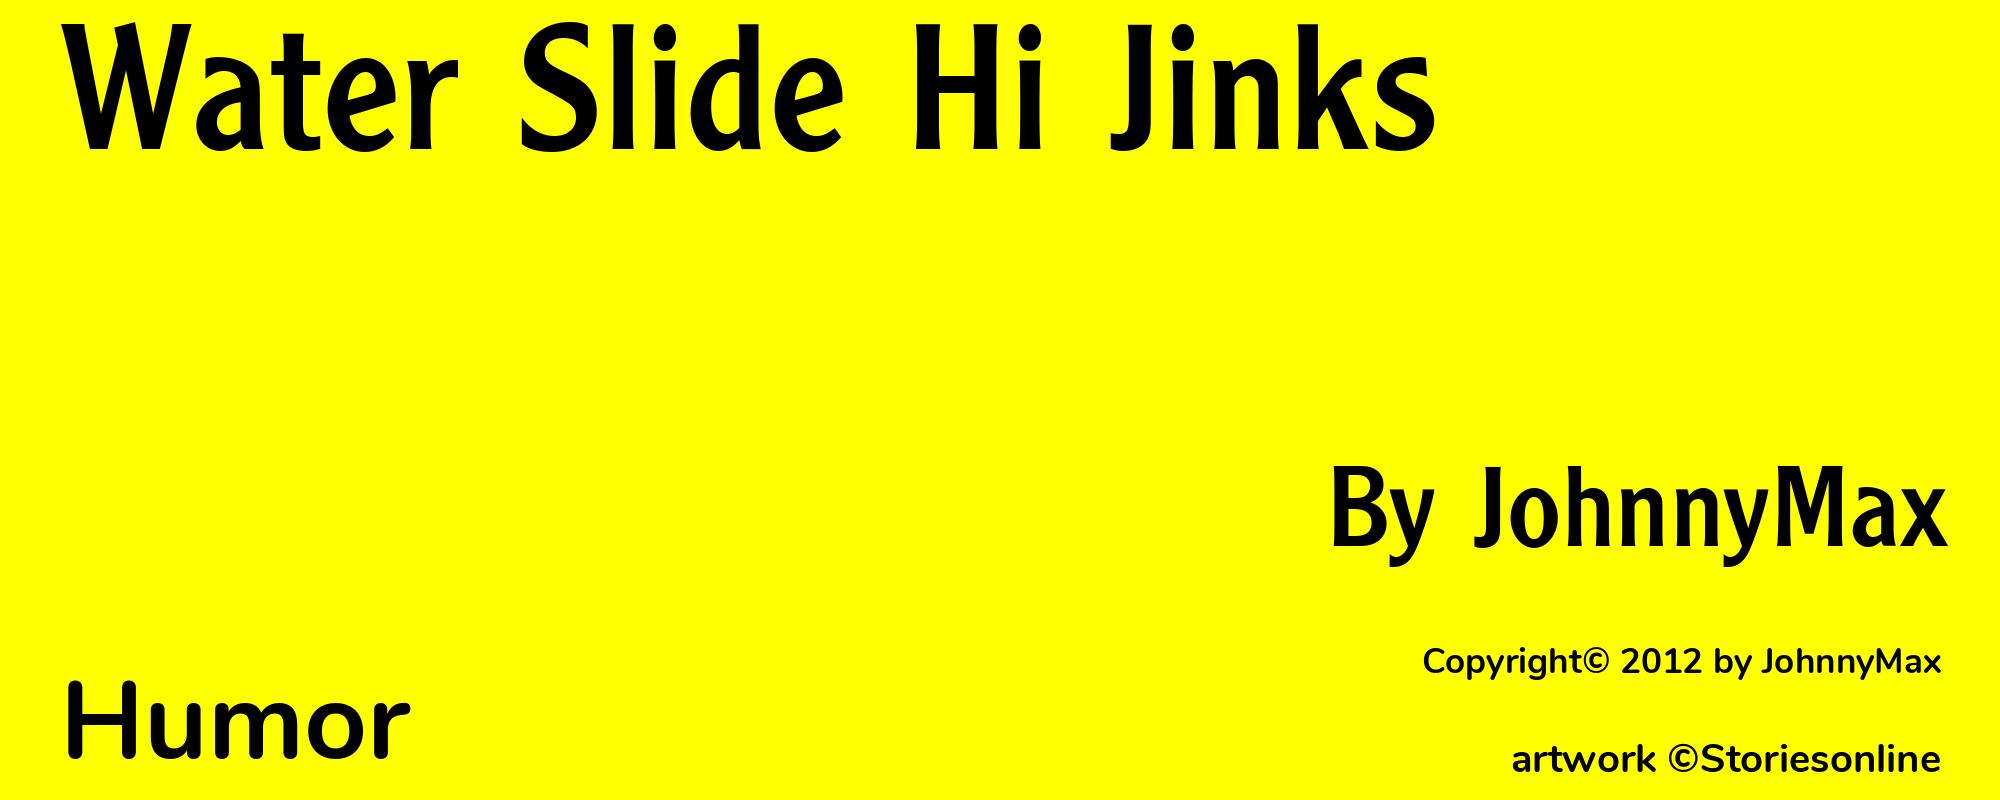 Water Slide Hi Jinks - Cover